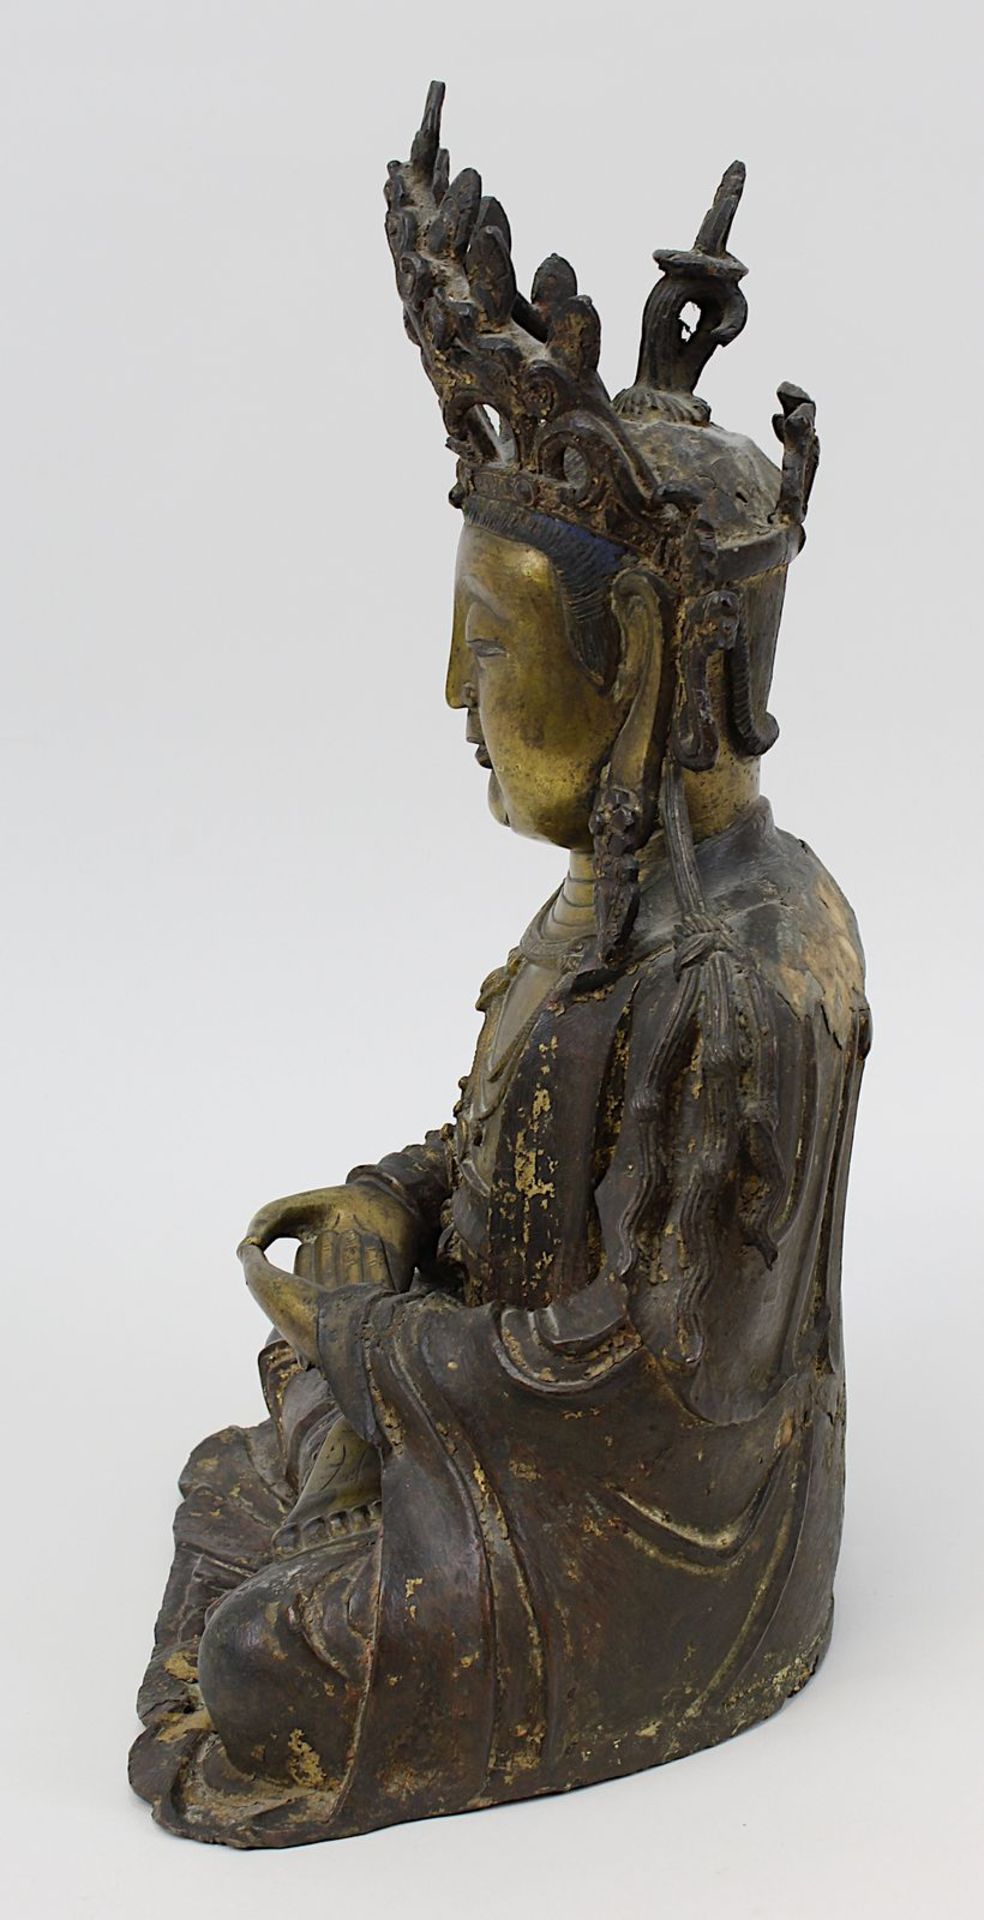 Großer Buddha aus Bronze, China 17./18. Jh., Ming-Dynastie, Guss in verlorener Form, Buddha in - Bild 2 aus 5